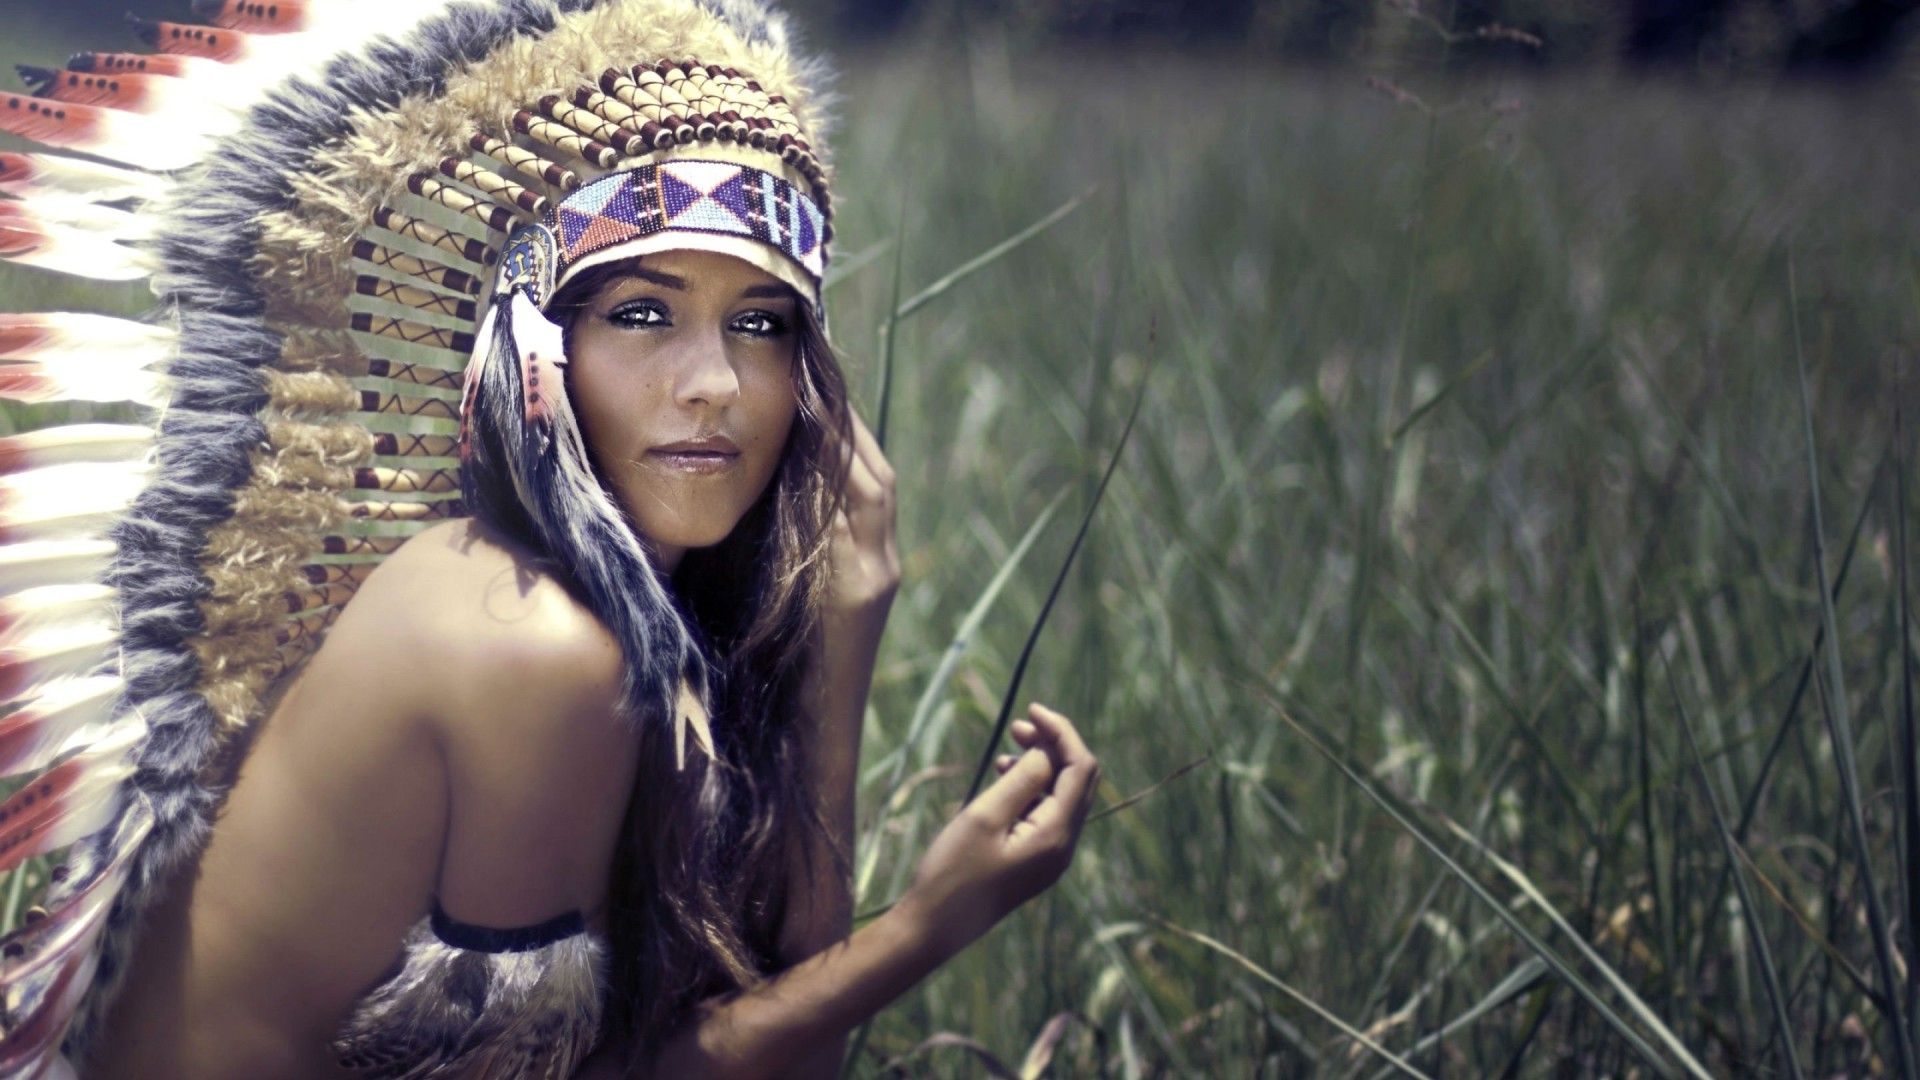 Native American Indian Model 1920x1080 1080p - Wallpaper - Free